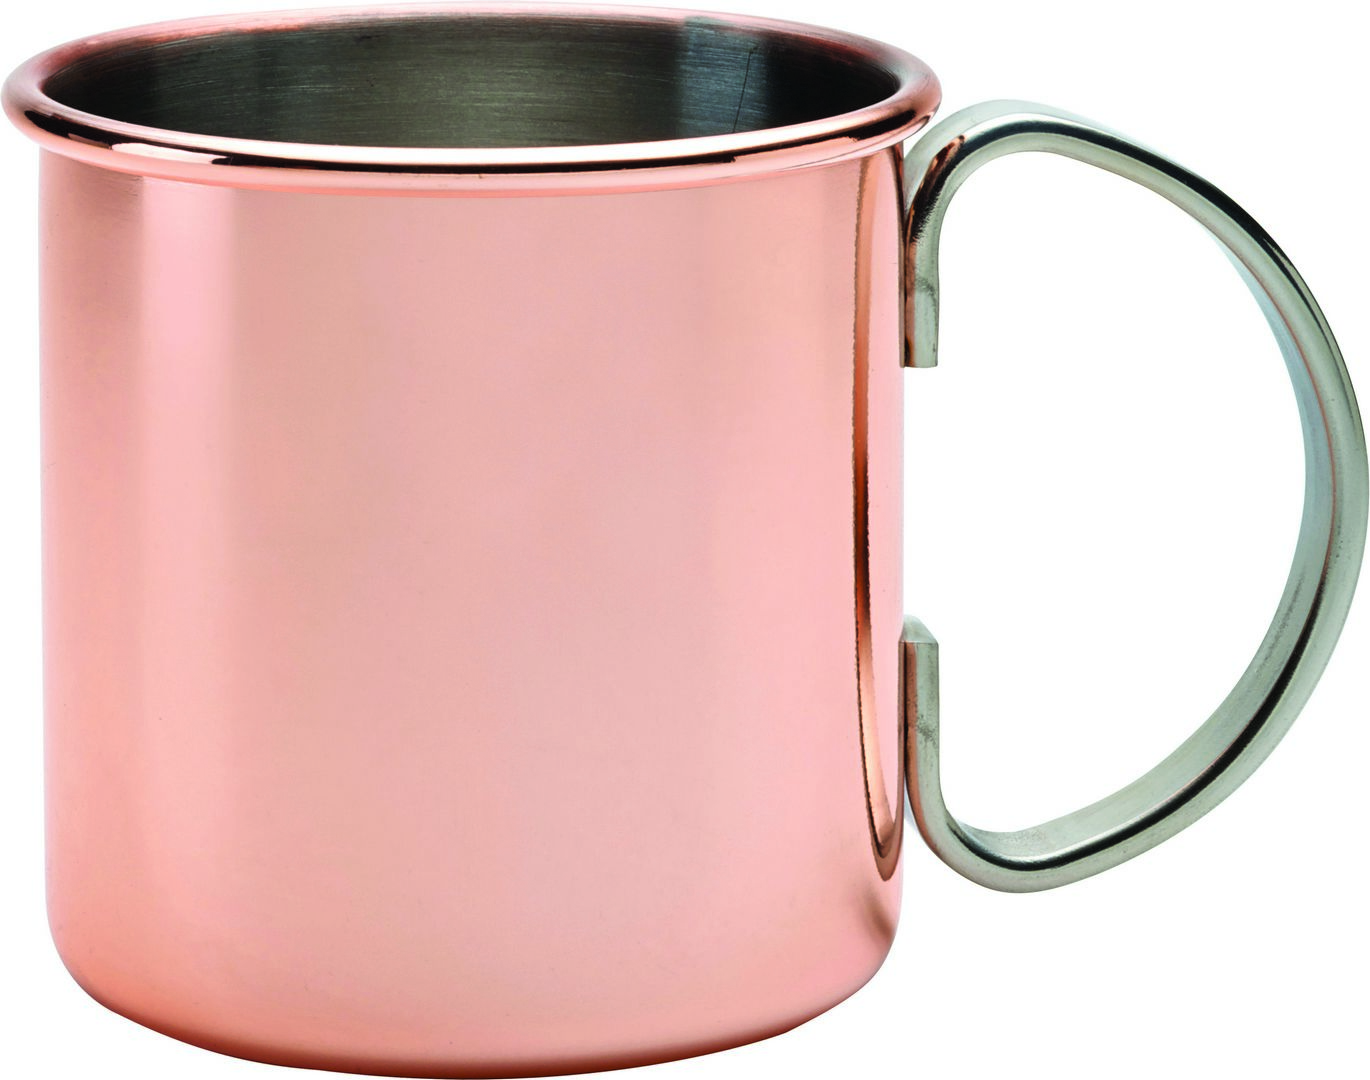 Copper Mug 17oz (48cl) - F91119-000000-B01006 (Pack of 6)